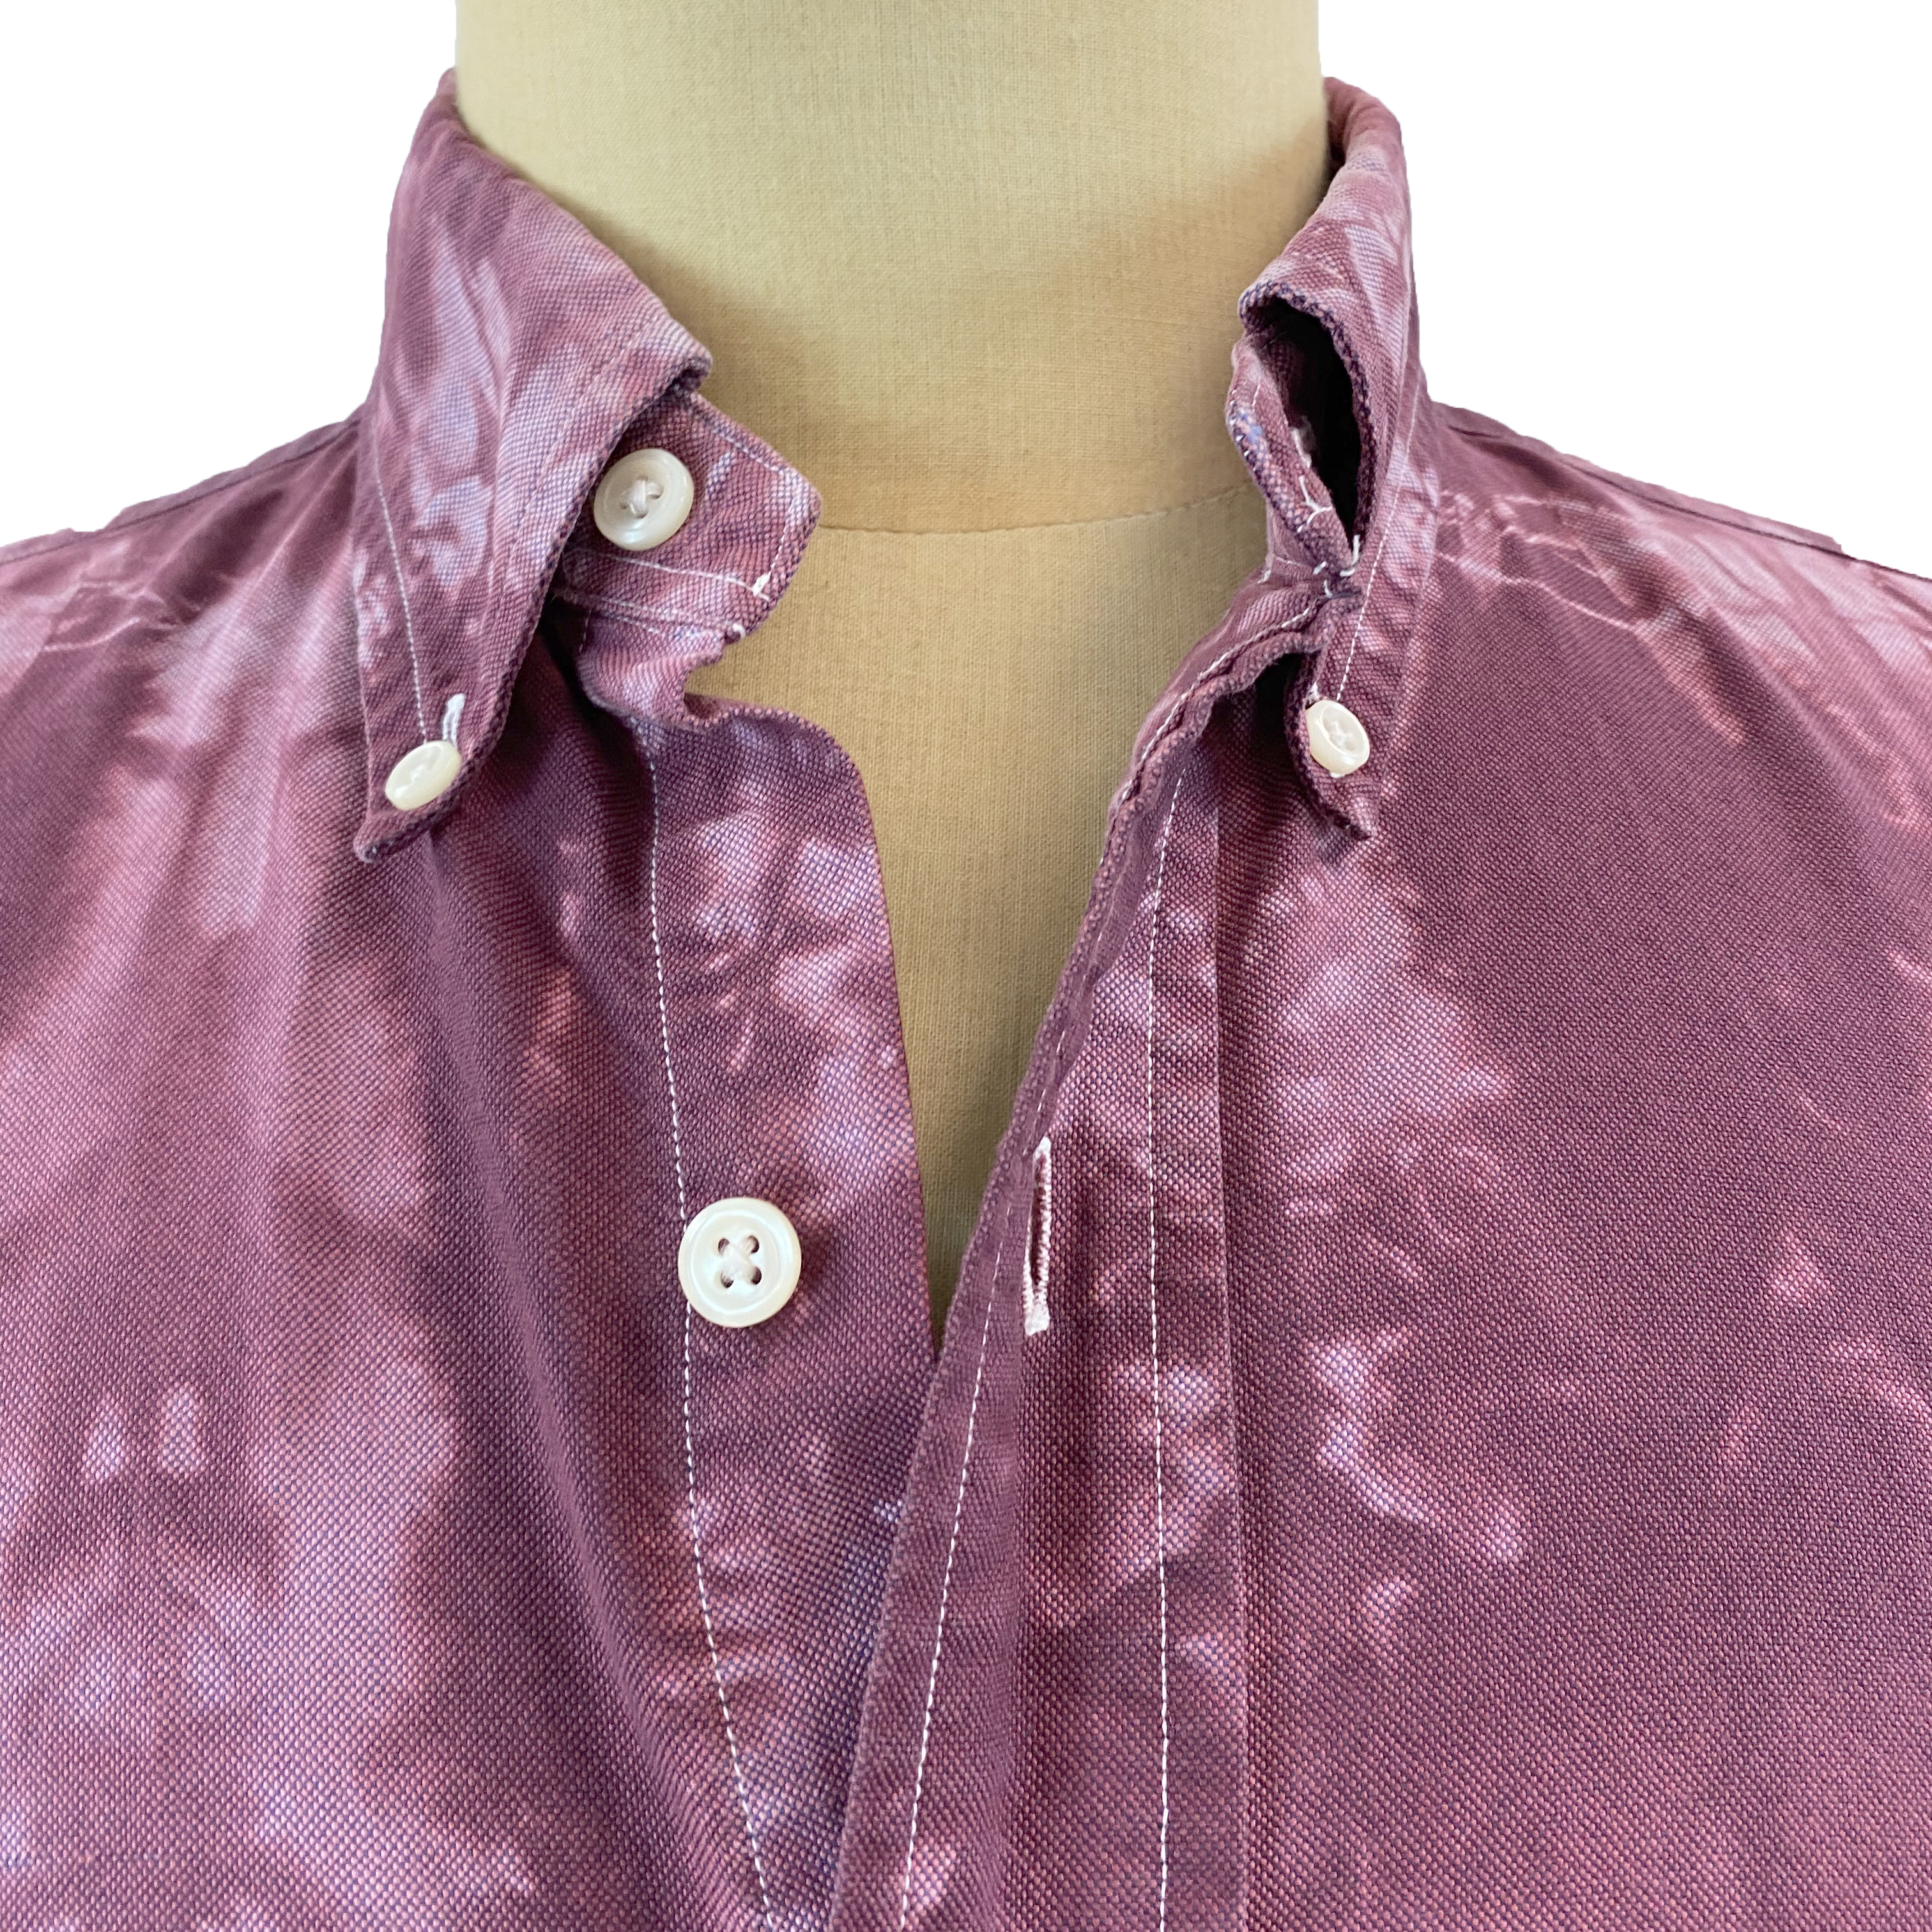 Ralph Lauren Tie-Dyed Effect Maroon Short-Sleeved Shirt